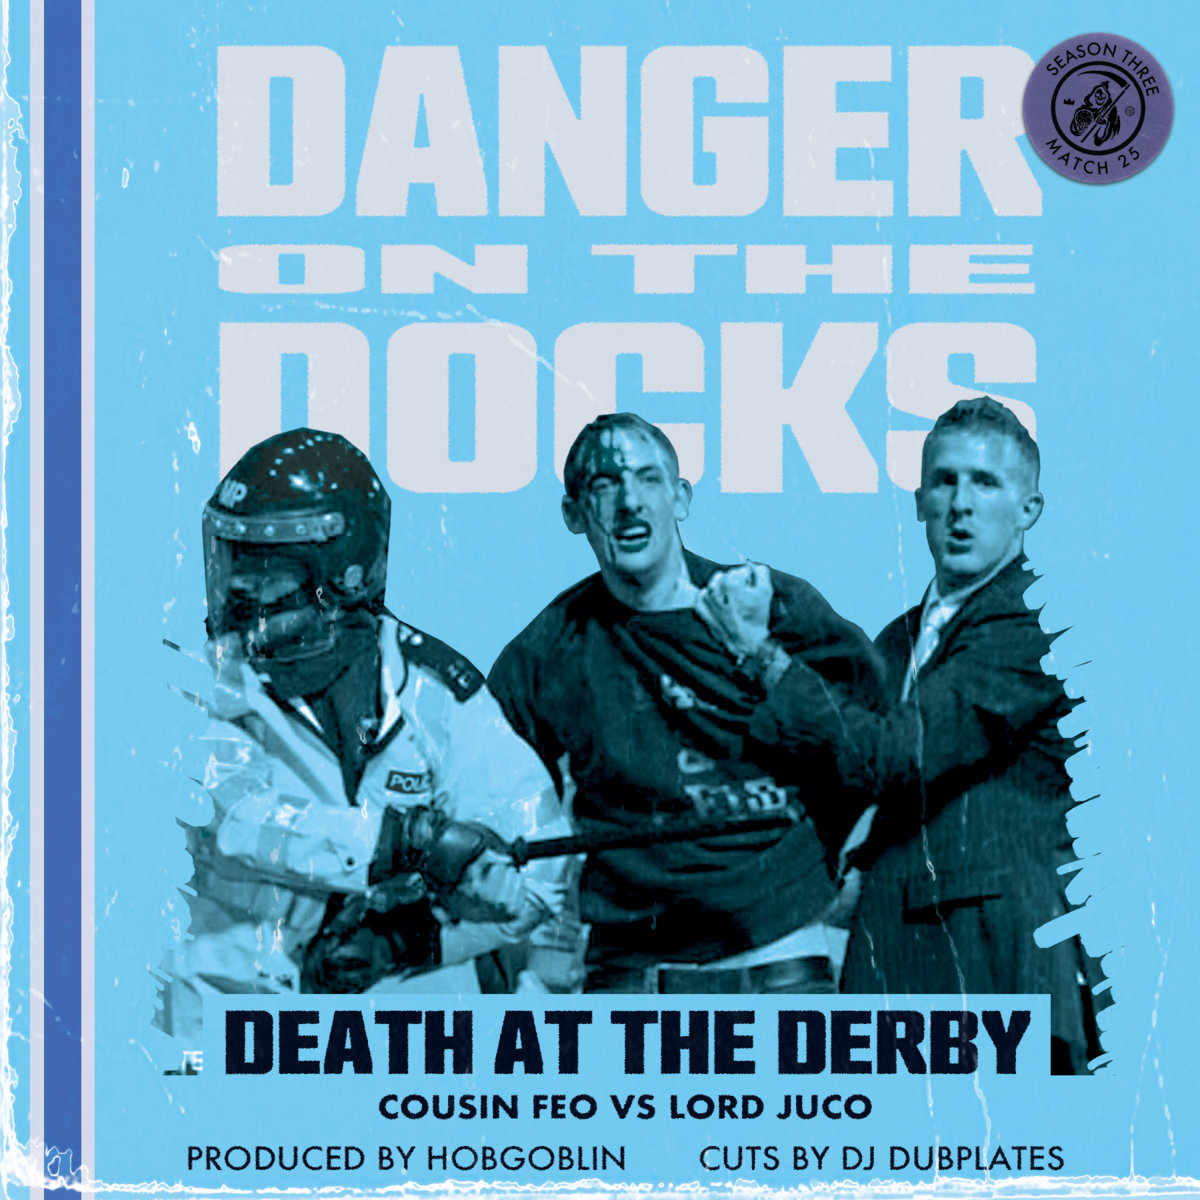 Death_at_the_derby_danger_on_the_docks__prod._hobgoblin_